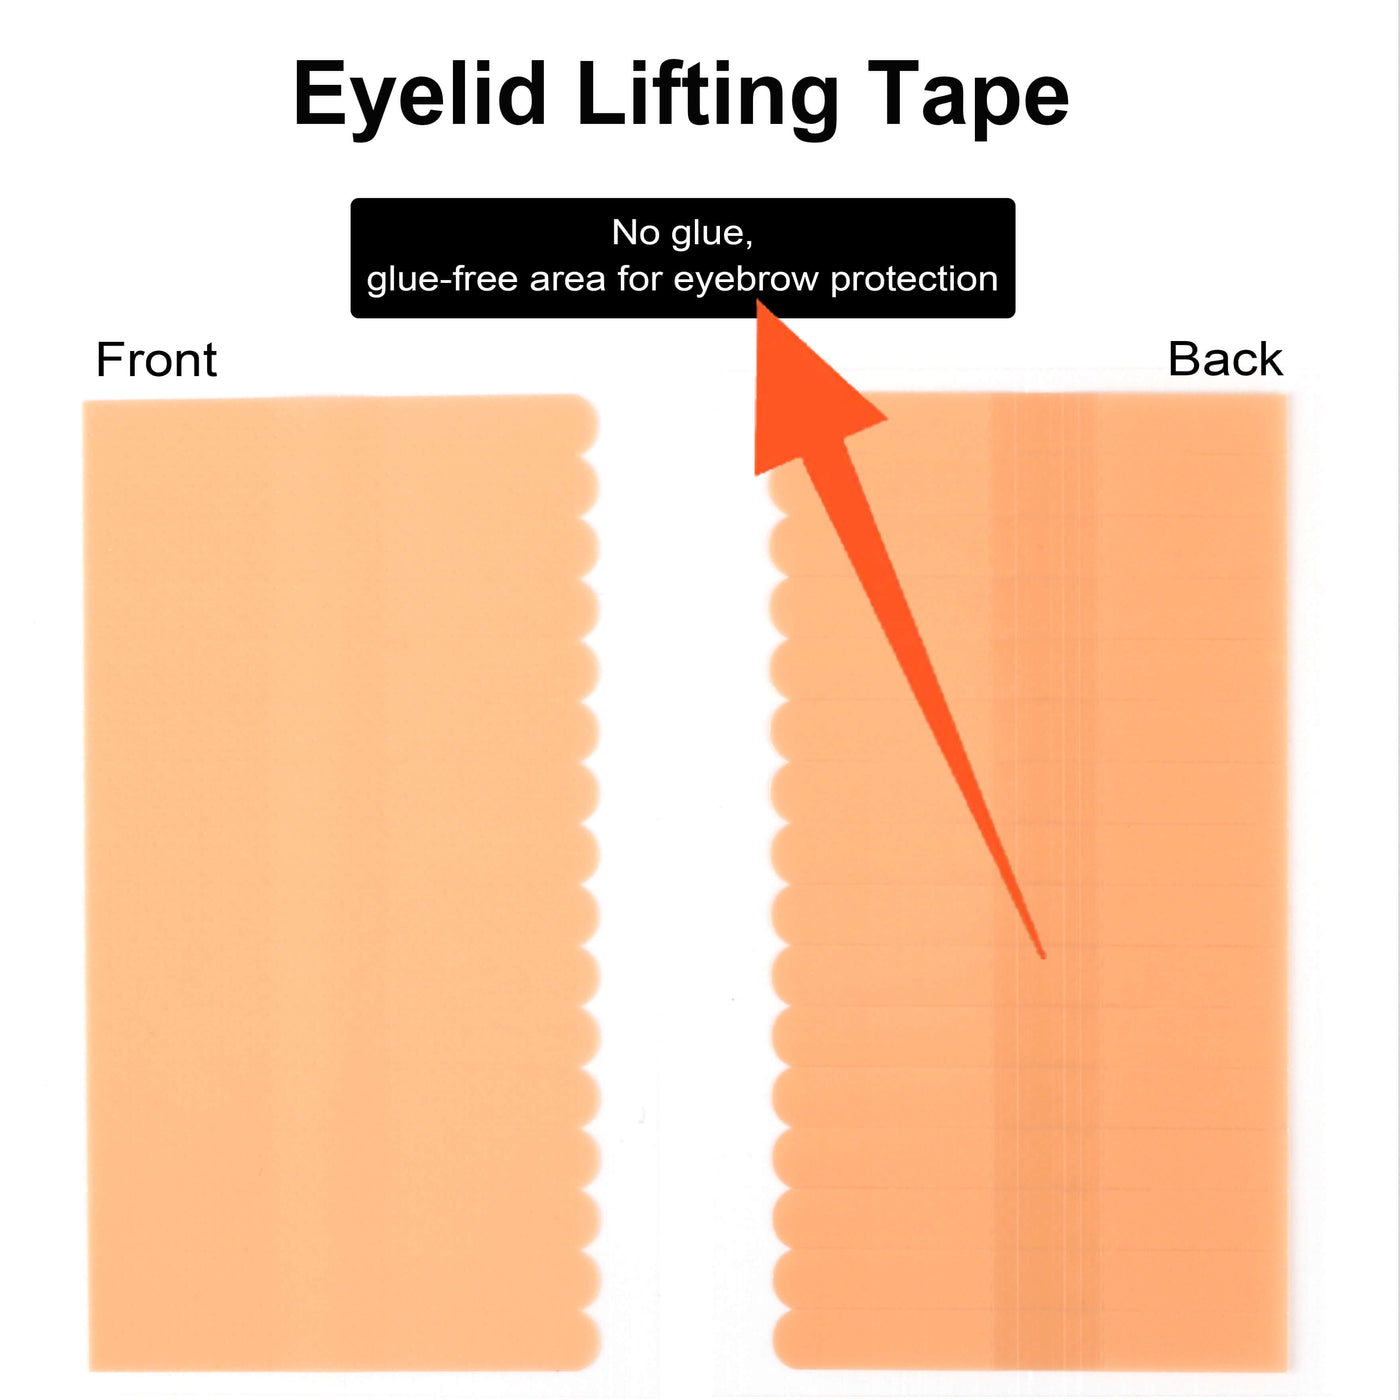 Eyelid Lifting Tape